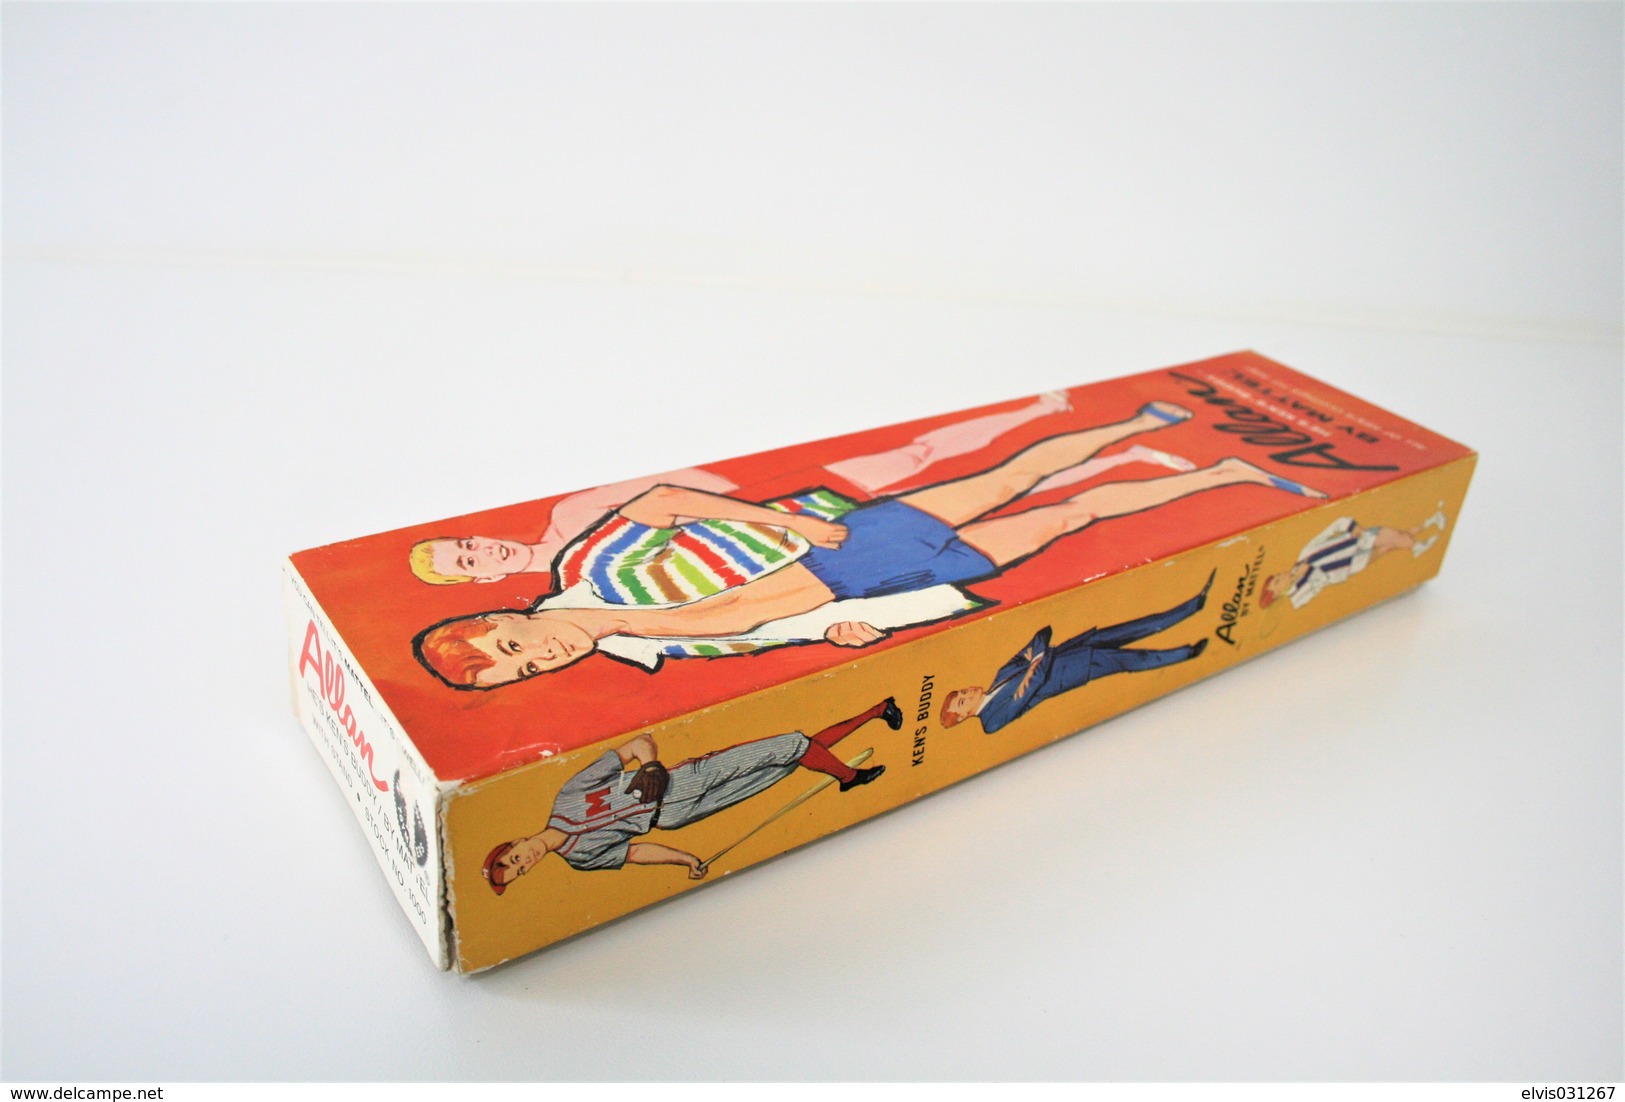 Barbie Accesoires '50-'60 - ALAN "KENS BUDDY" No. 1000 - 1963 + Original Box - Original Vintage Barbie - Ken -